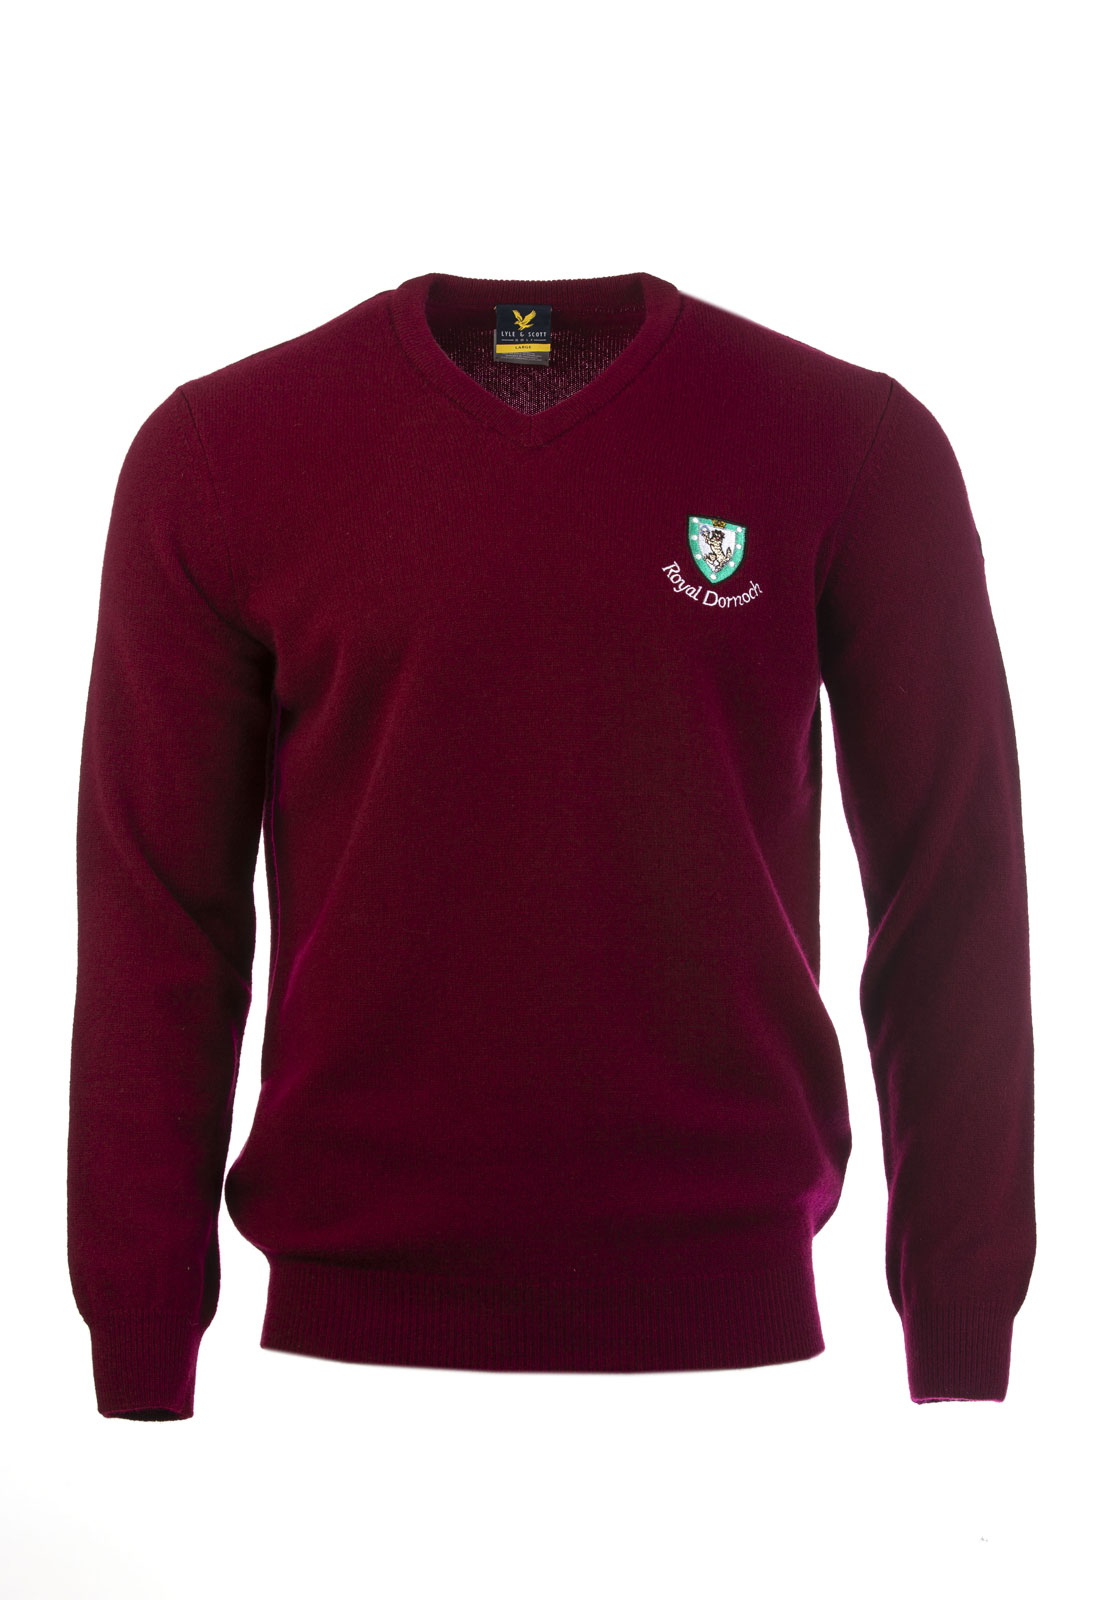 Lyle & Scott Classic V-Neck Sweater - Royal Dornoch Pro Shop